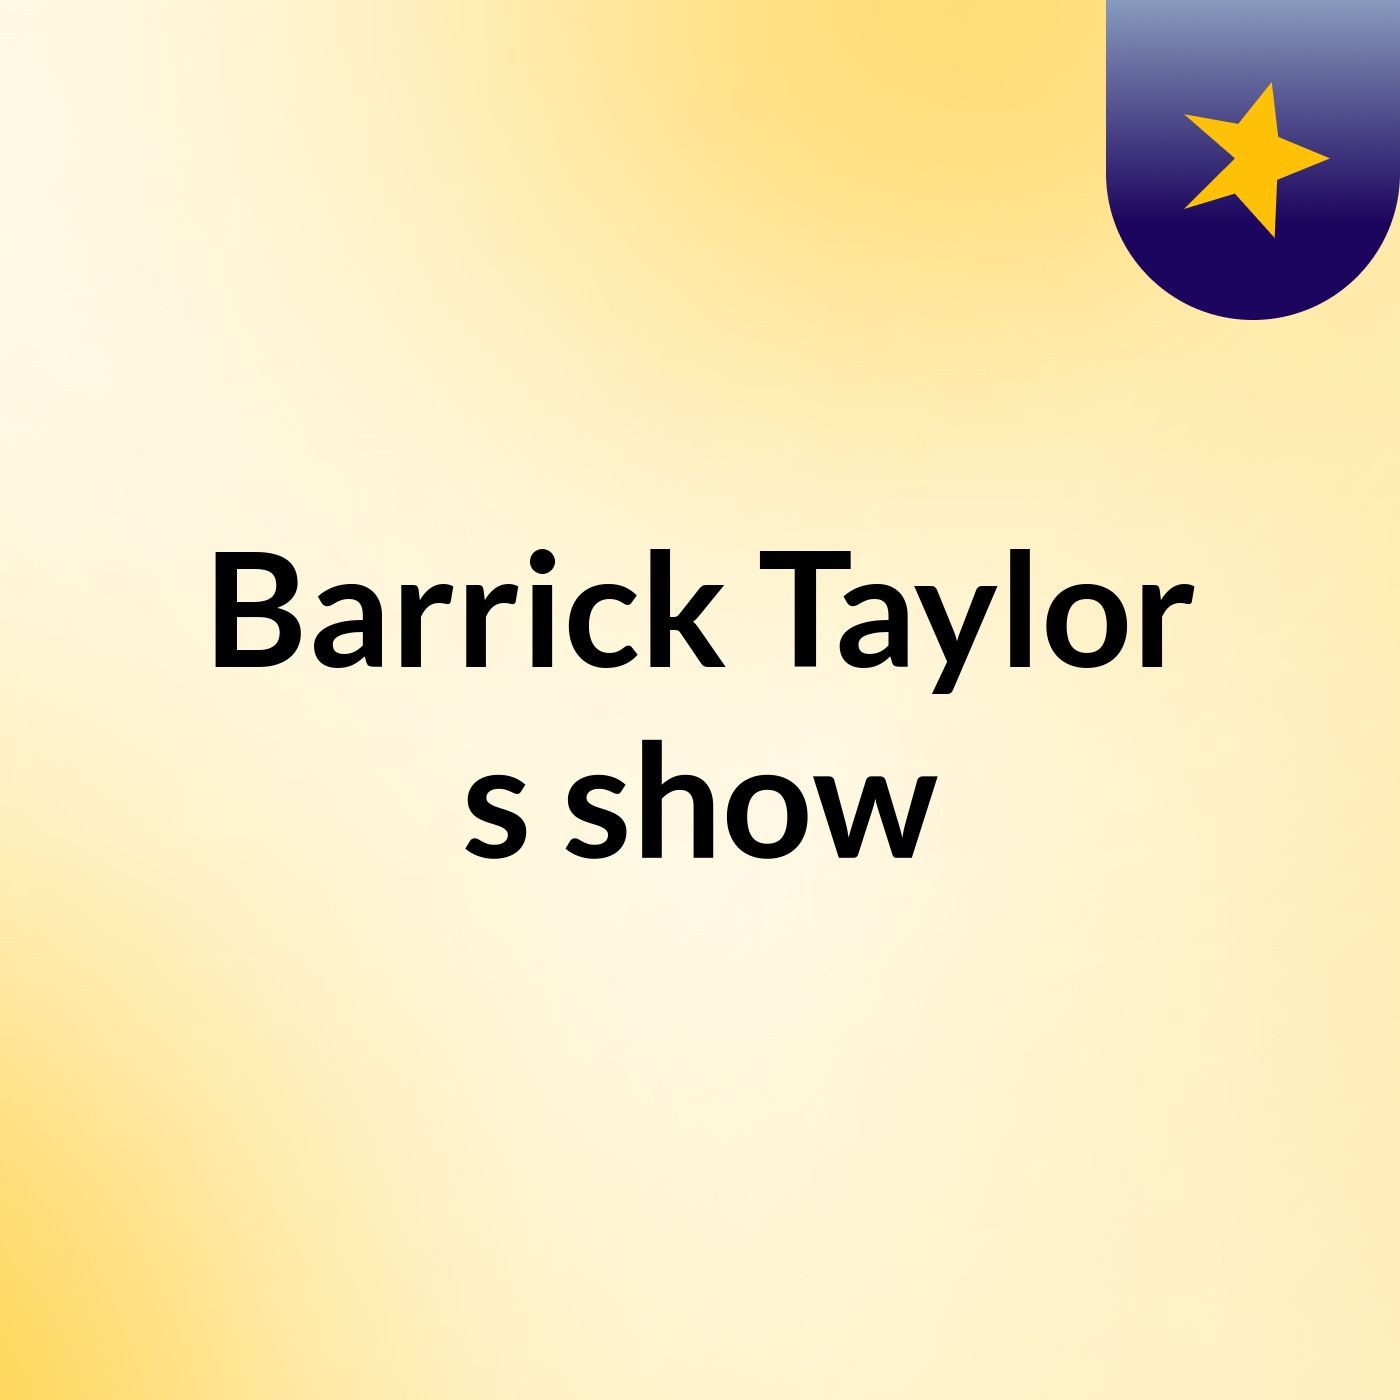 Barrick Taylor's show